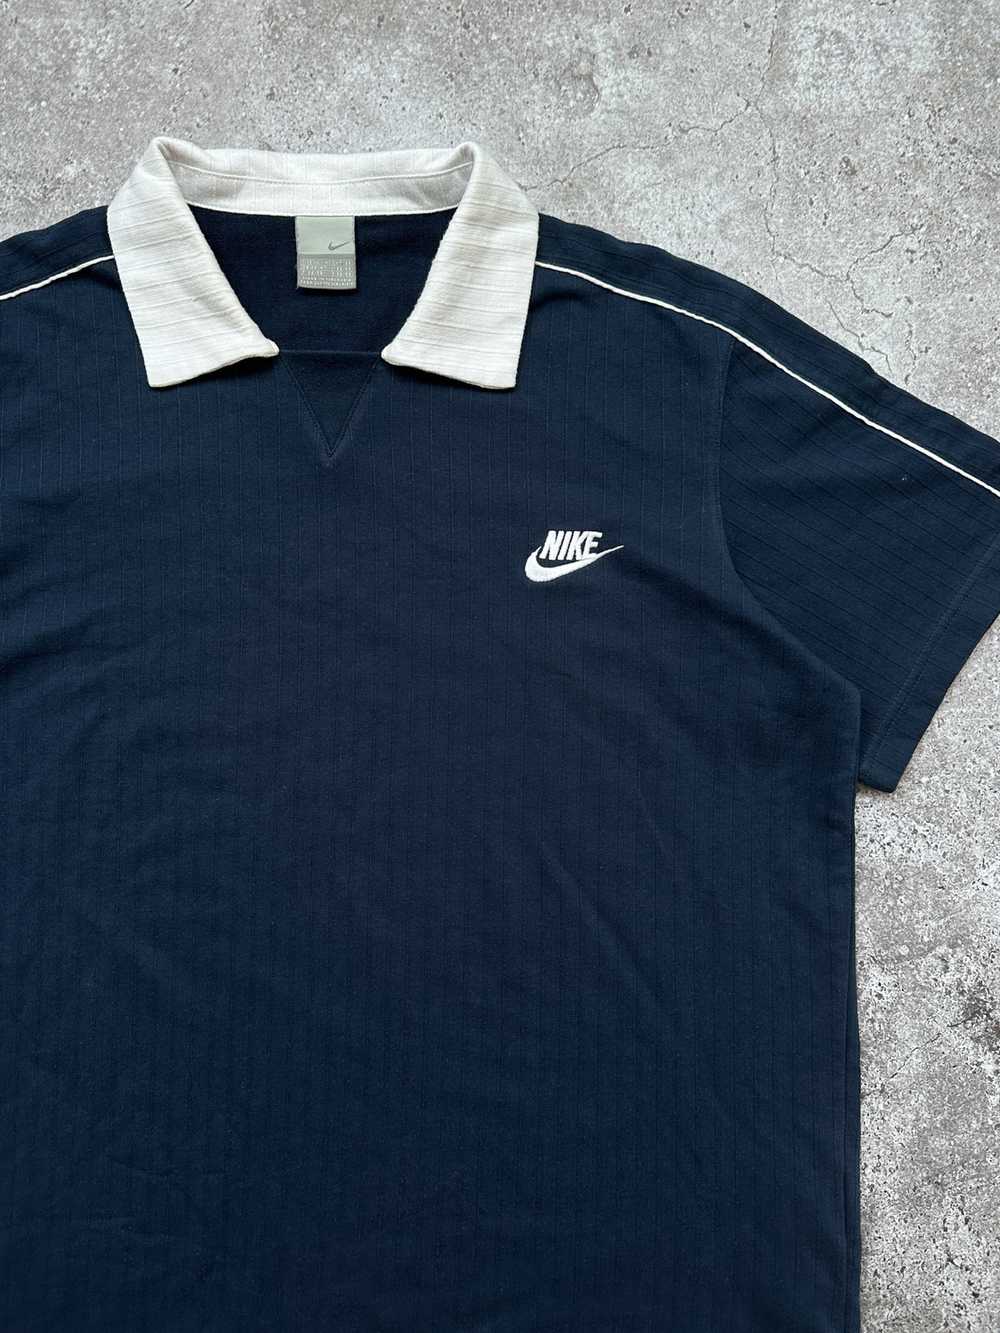 Nike × Vintage Vintage Nike 90s Y2k Polo Shirt - image 4